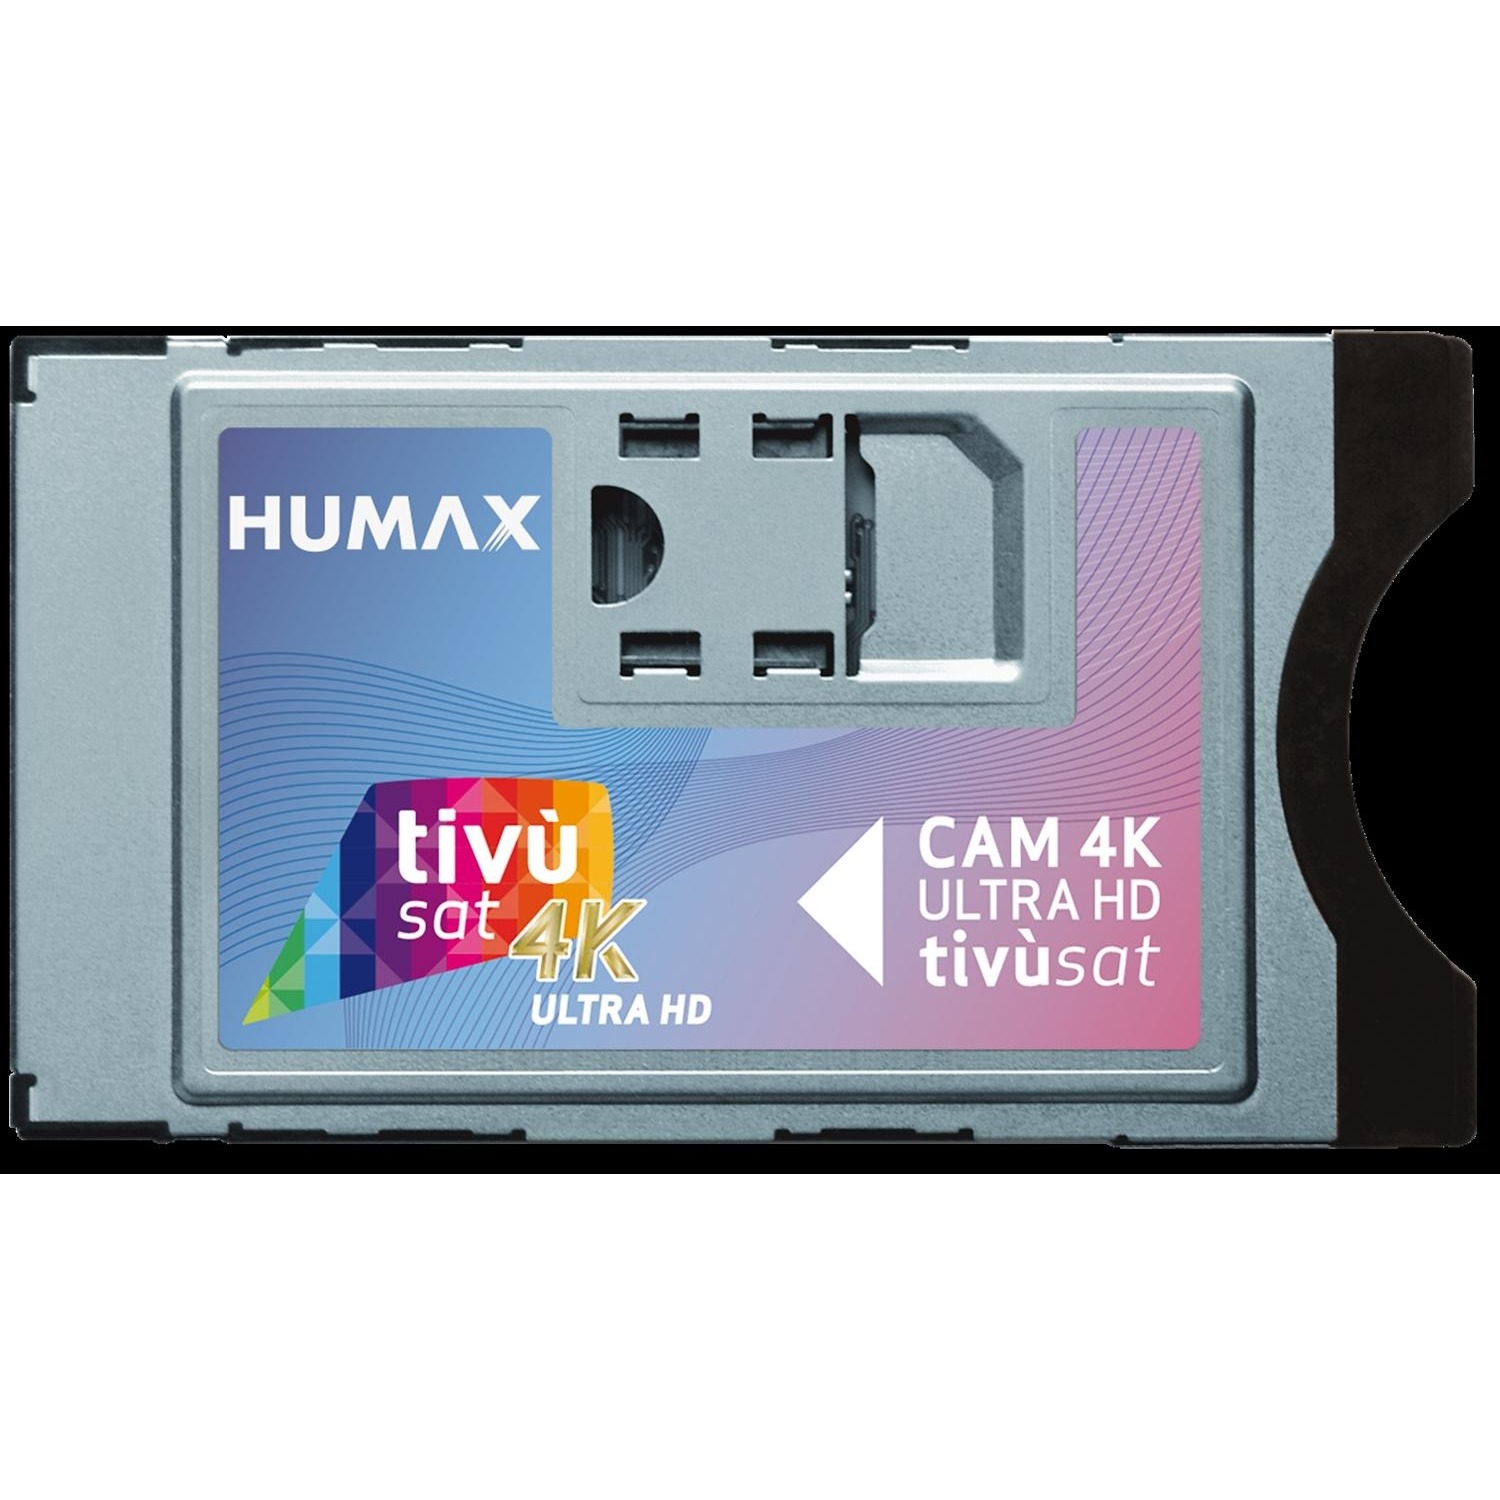 Immagine per Modulo CAM Humax Tivùsat 4K UHD da DIMOStore